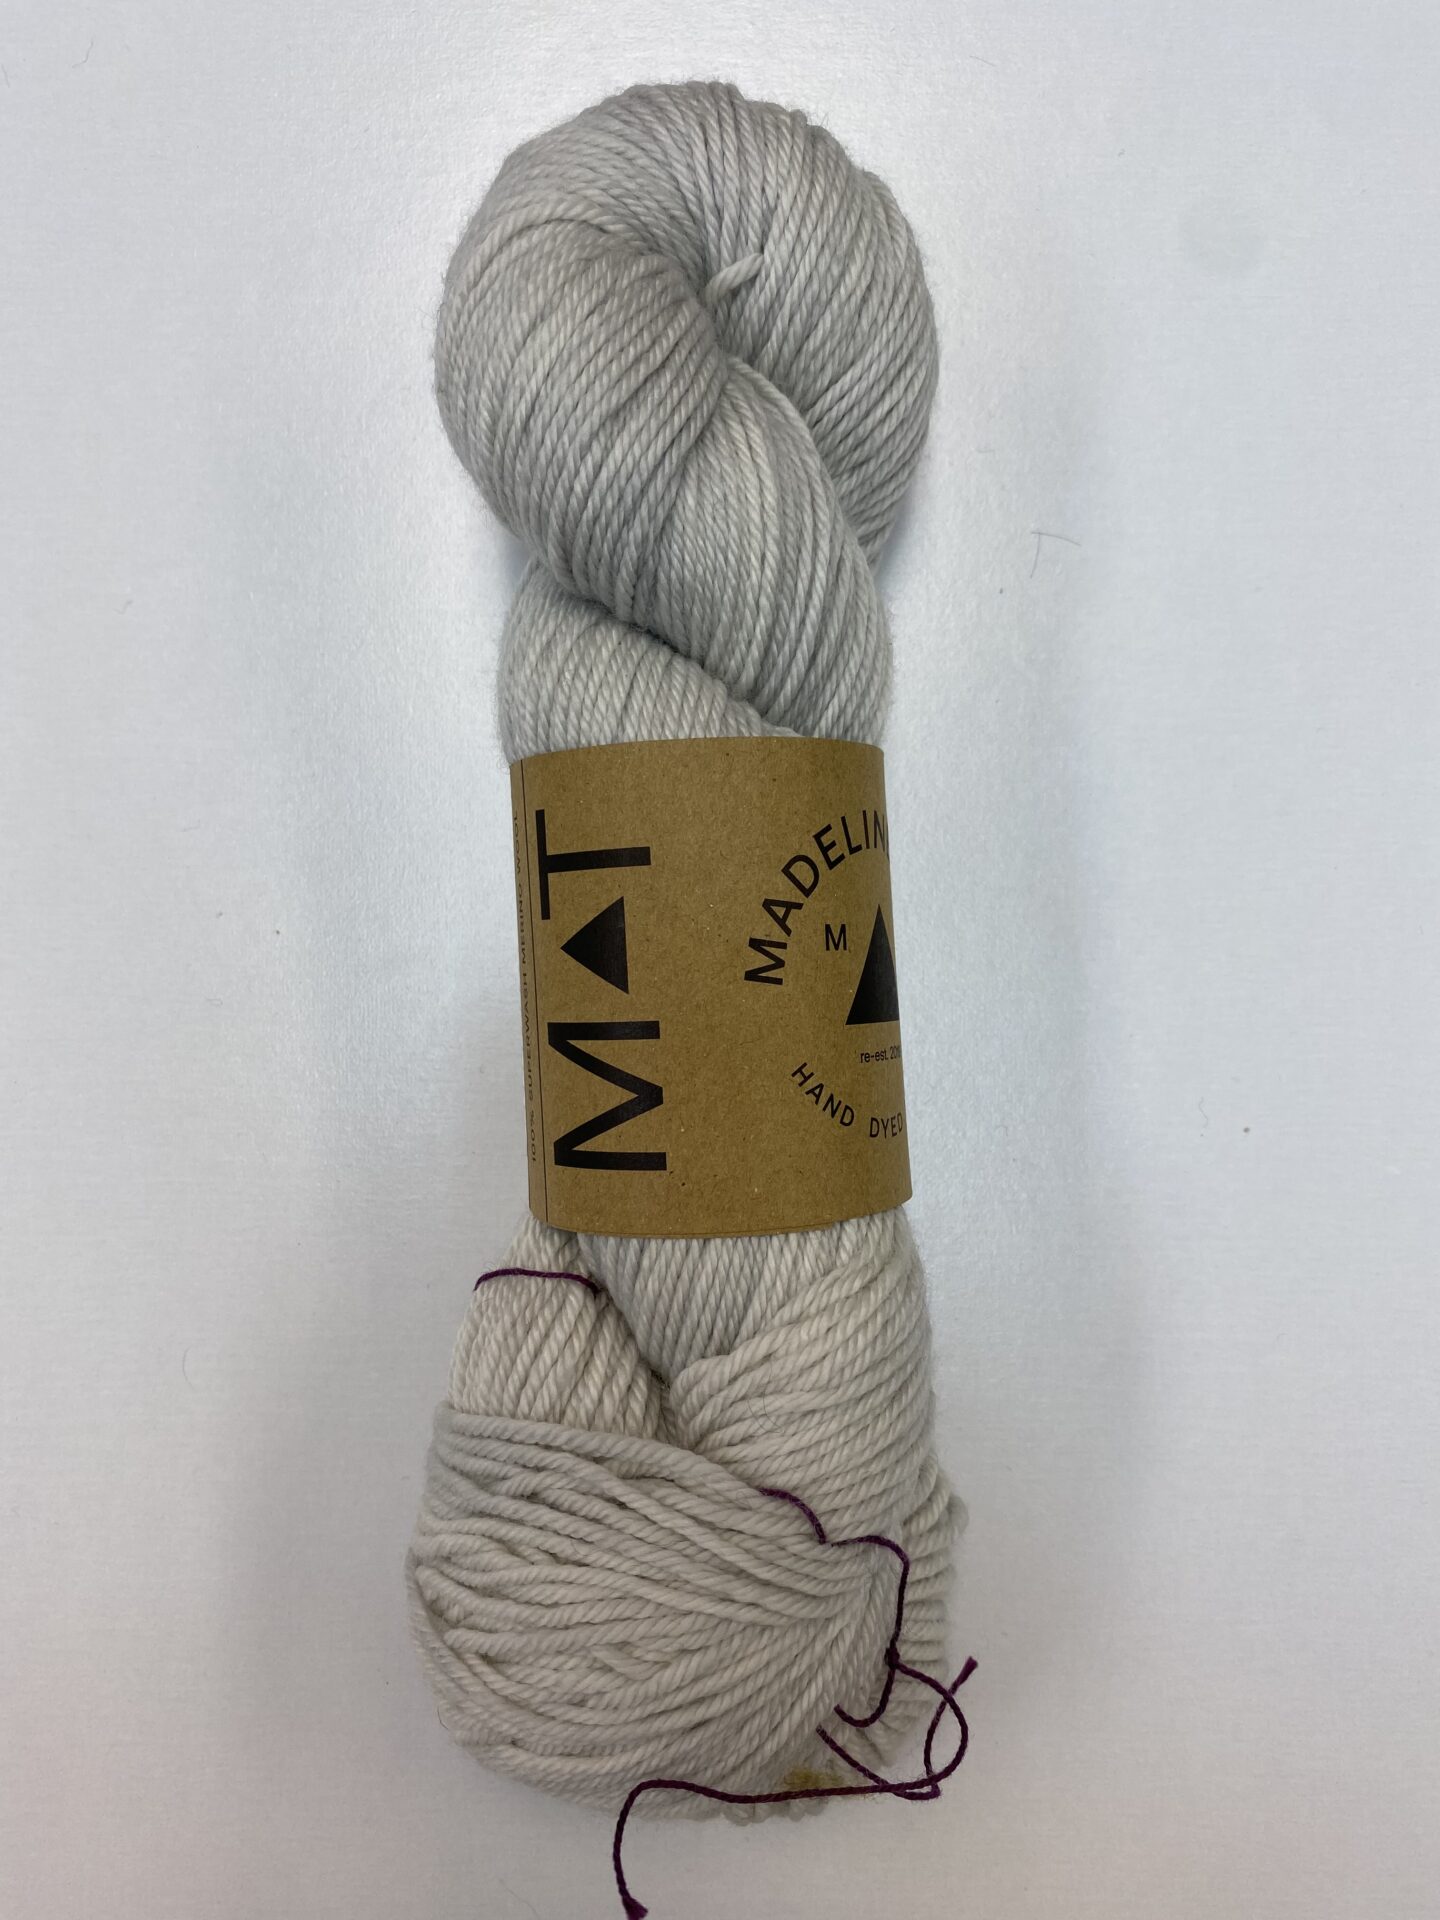 High Quality Hand Dyed Madelinetosh Yarn in Grey